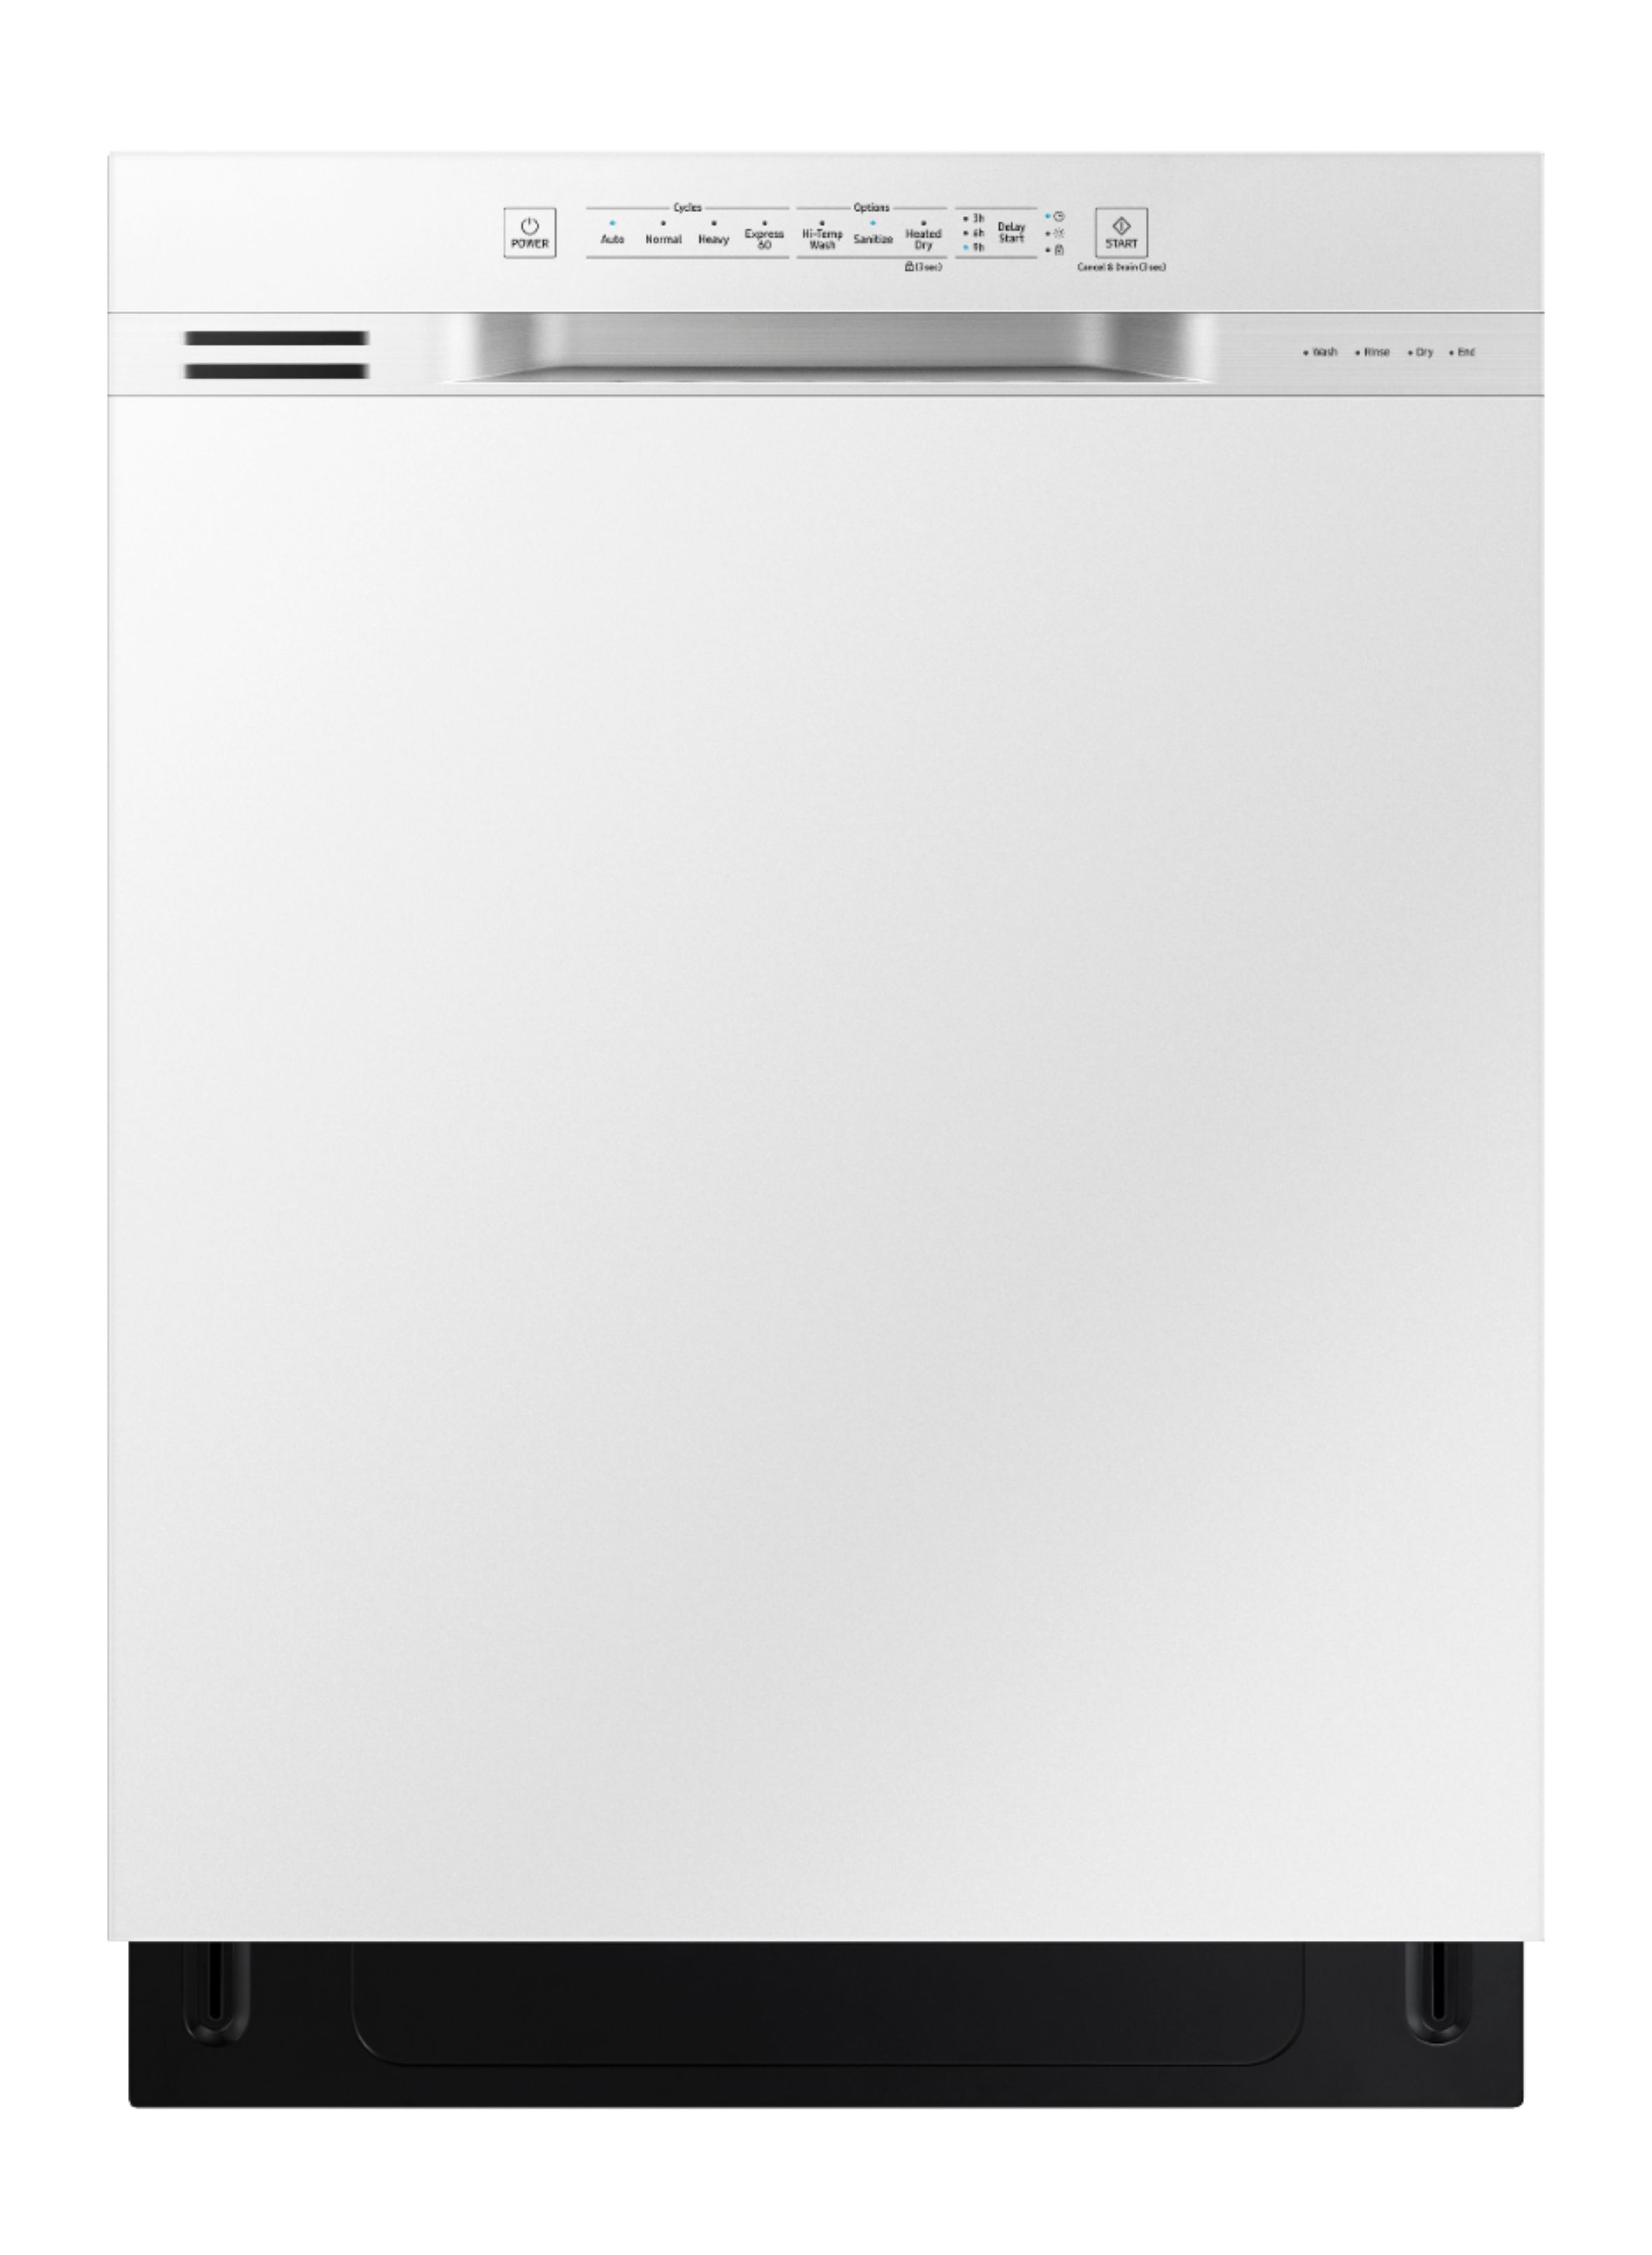 white dishwasher